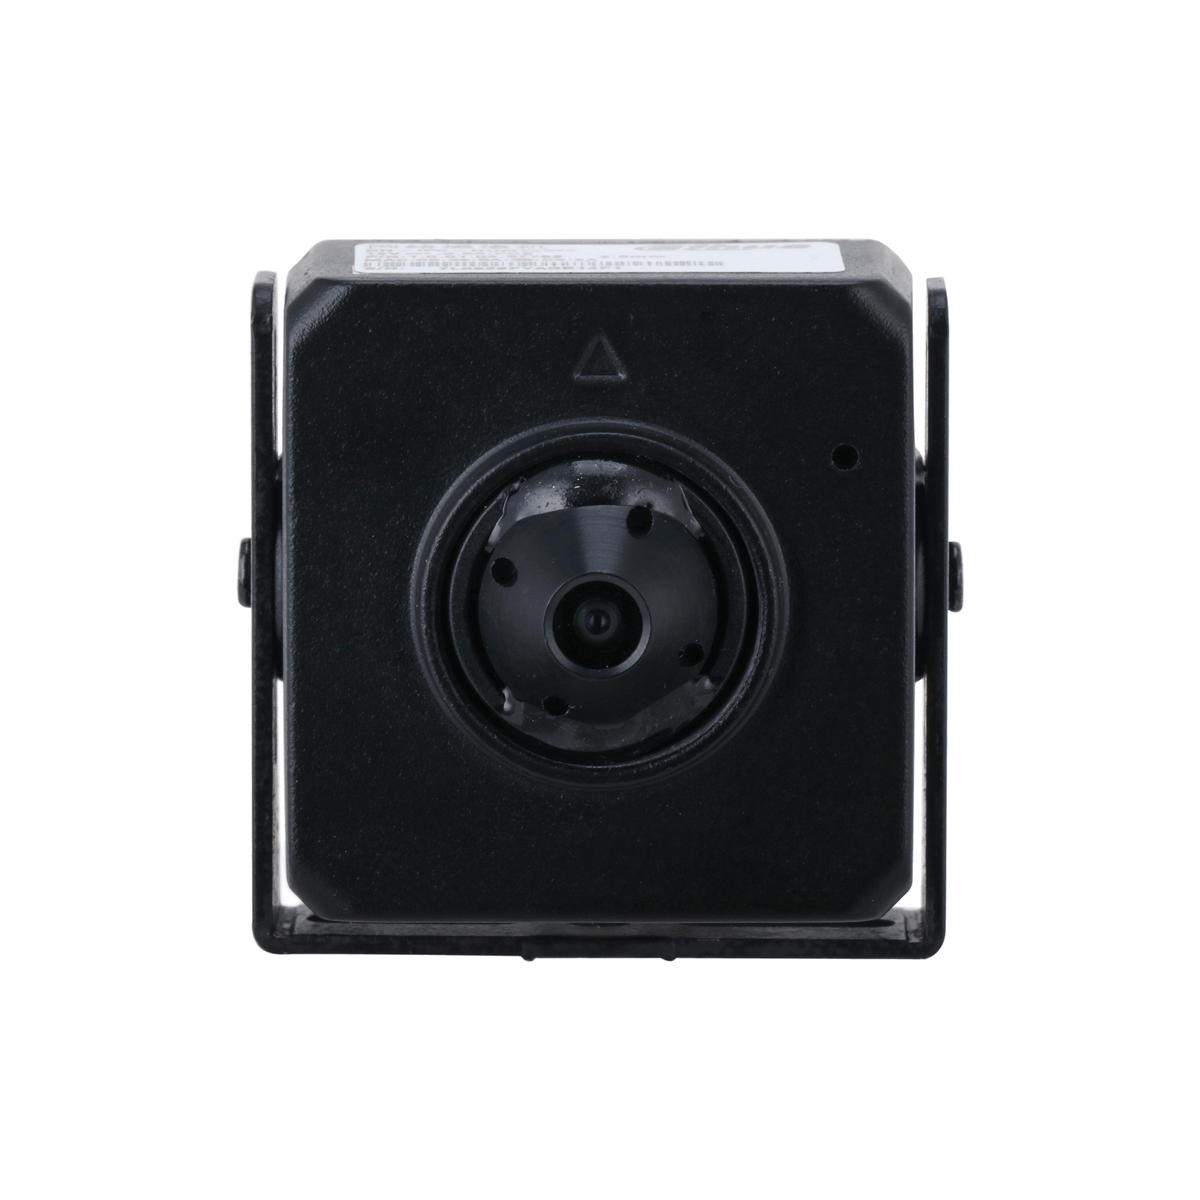 DAHUA IPC-HUM4431S-L4 4MP Fixed-focal Pinhole Network Camera